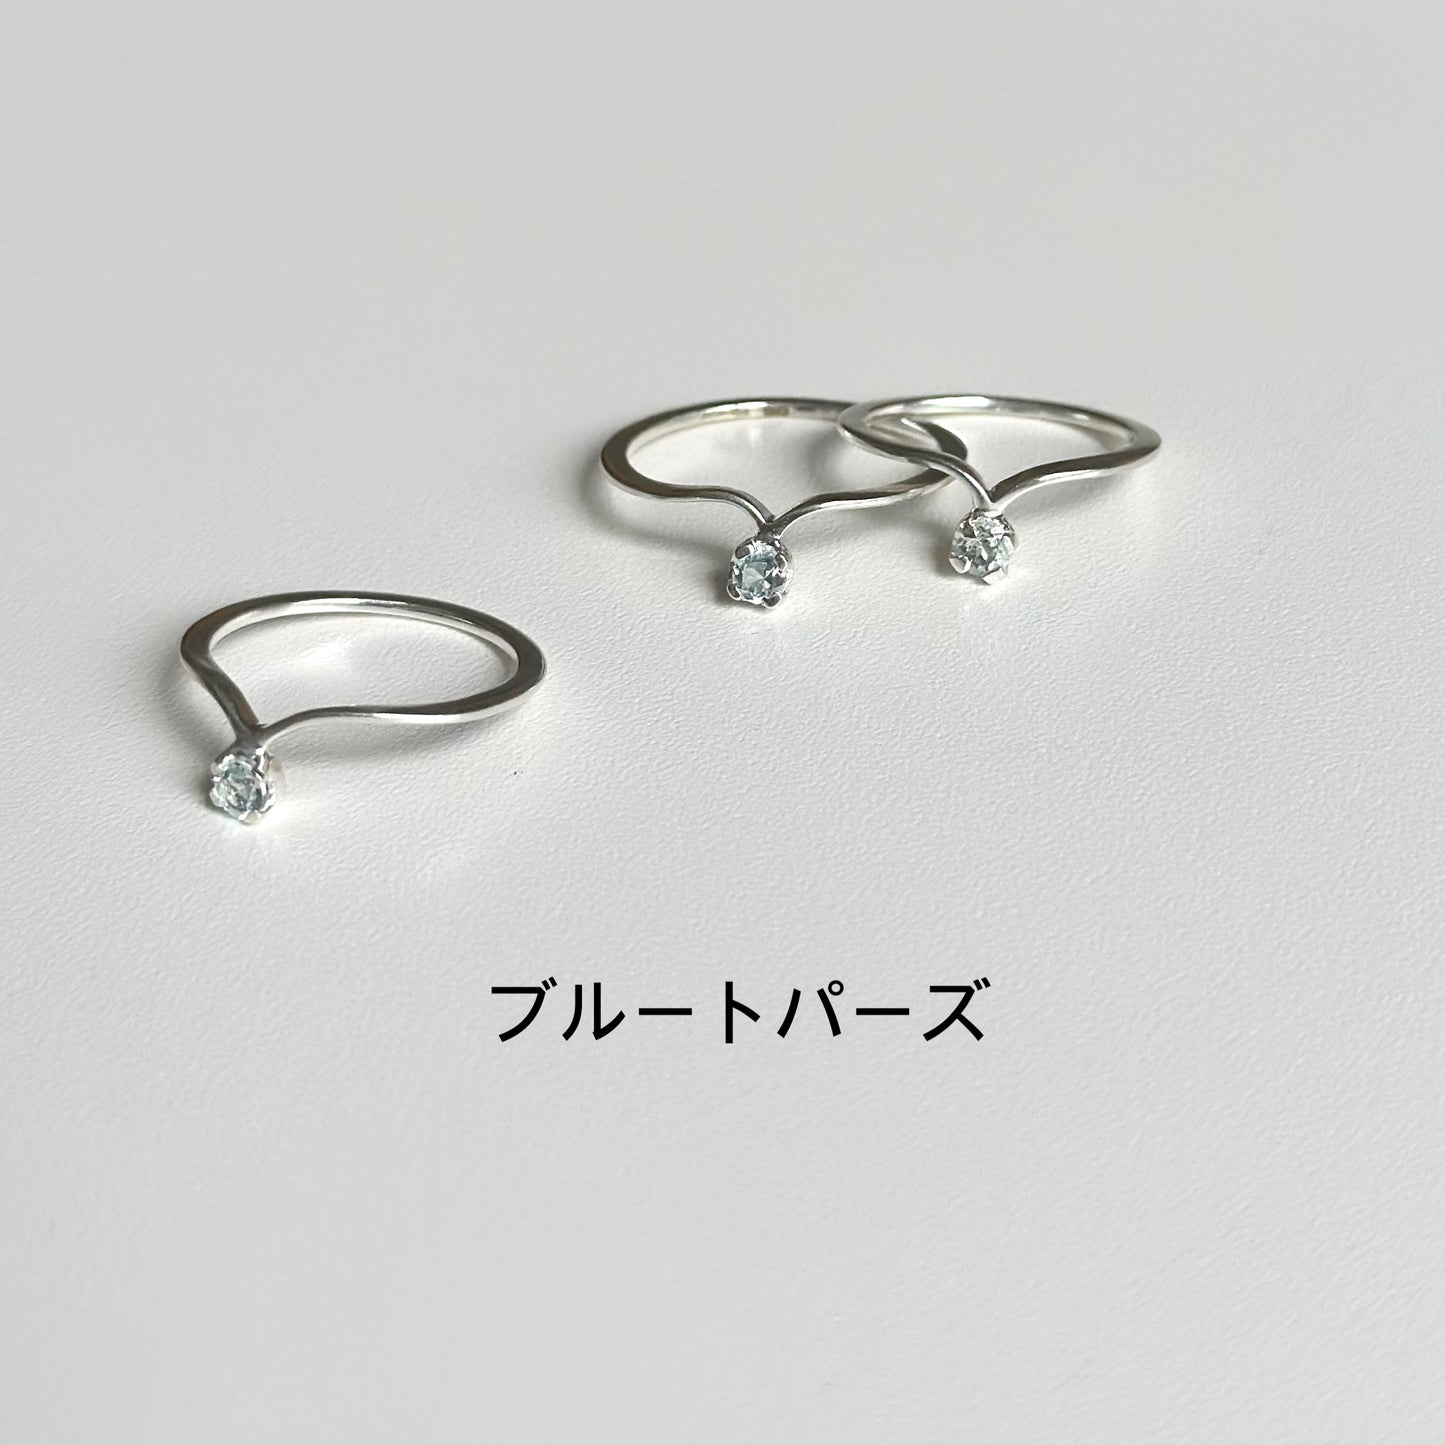 Silver925 design ring 9